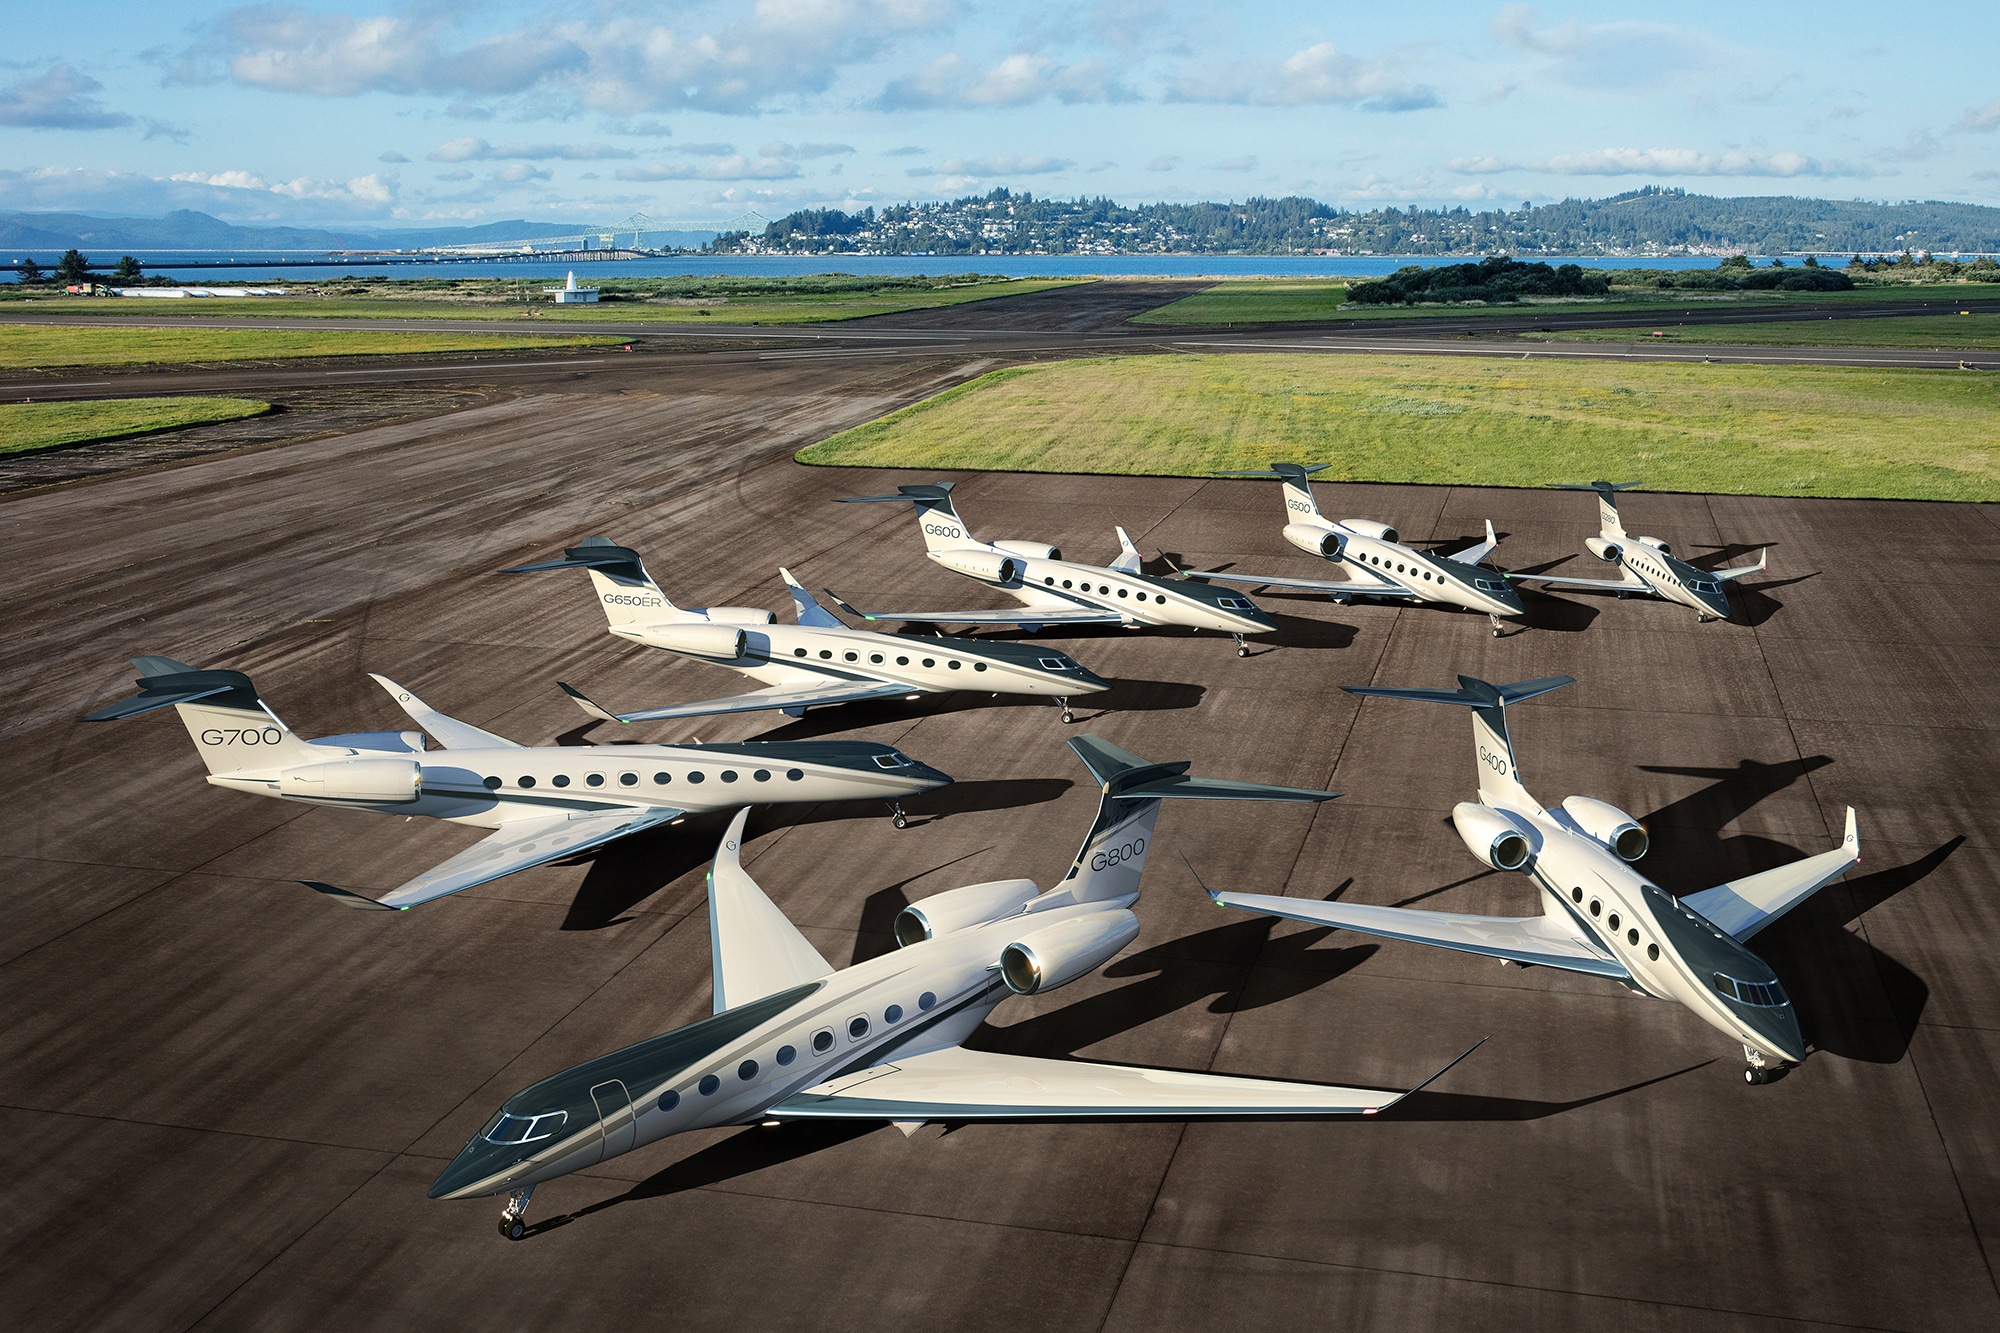 Gulfstream's fleet of private jets